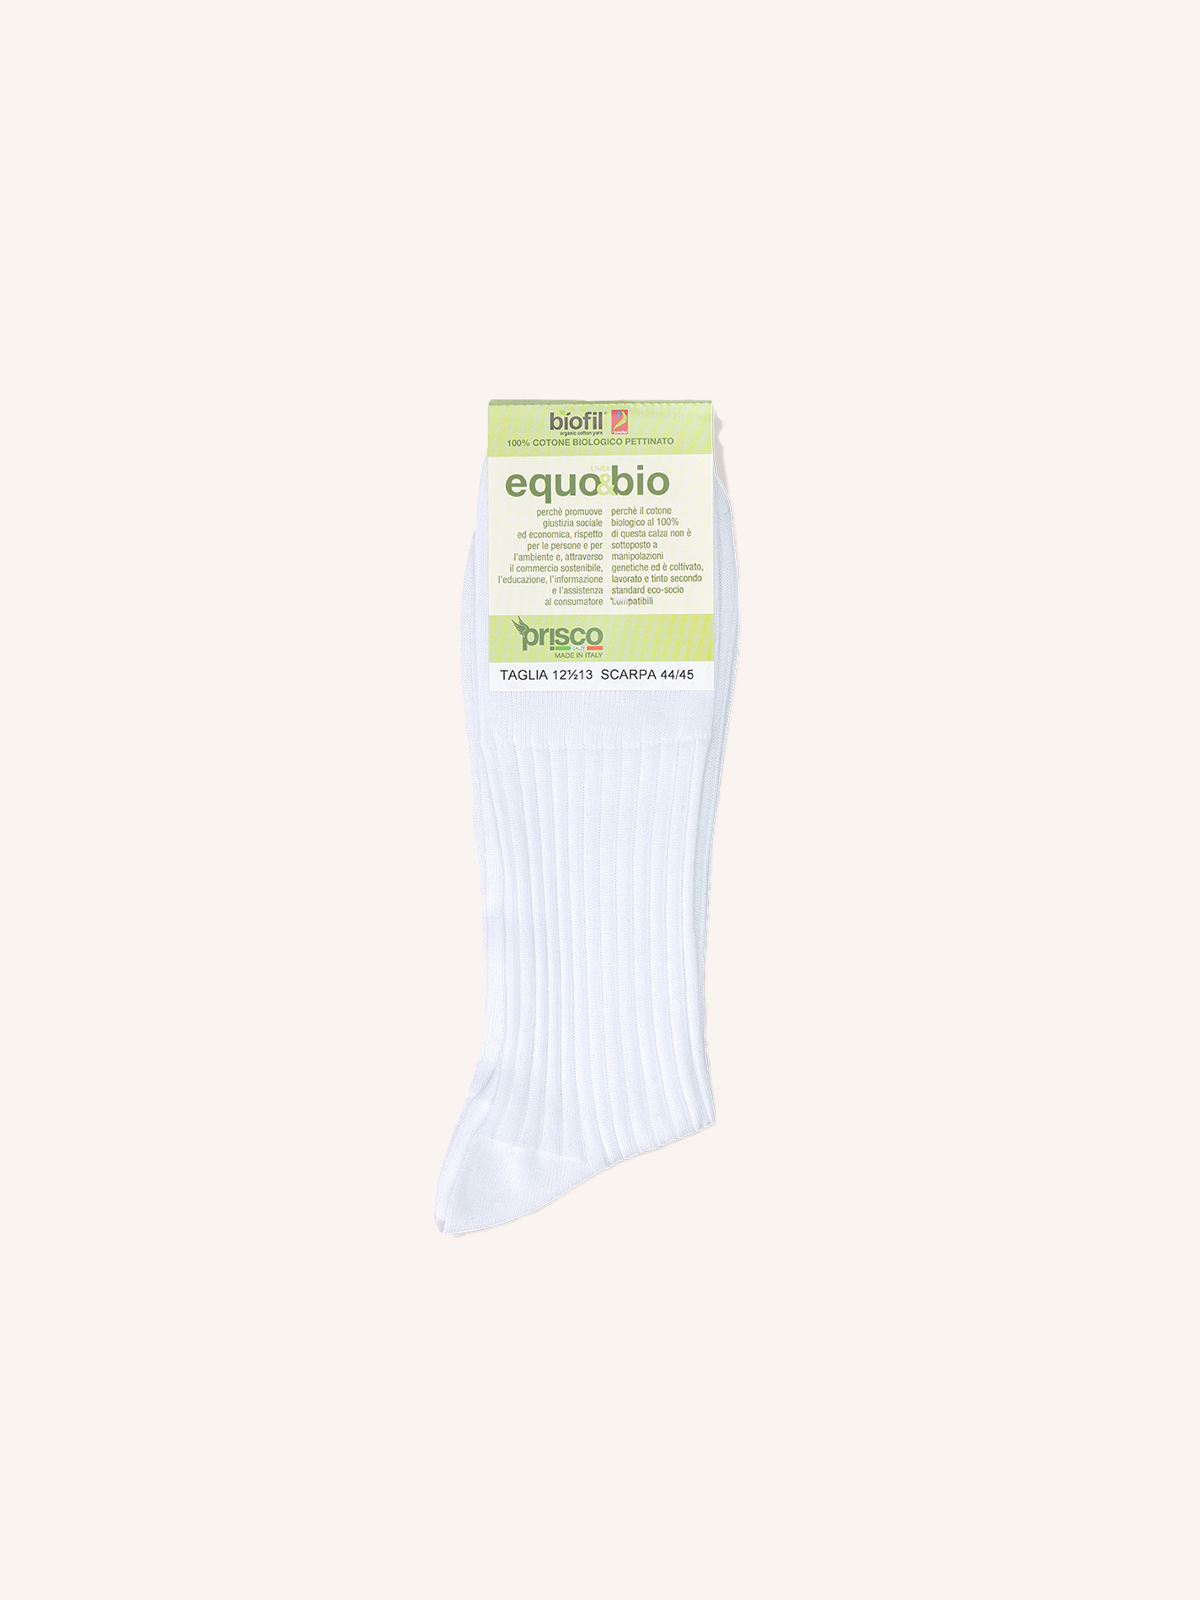 Short Sock in Organic Cotton for Men | Plain Color | Pack of 3 pairs | Bio U1